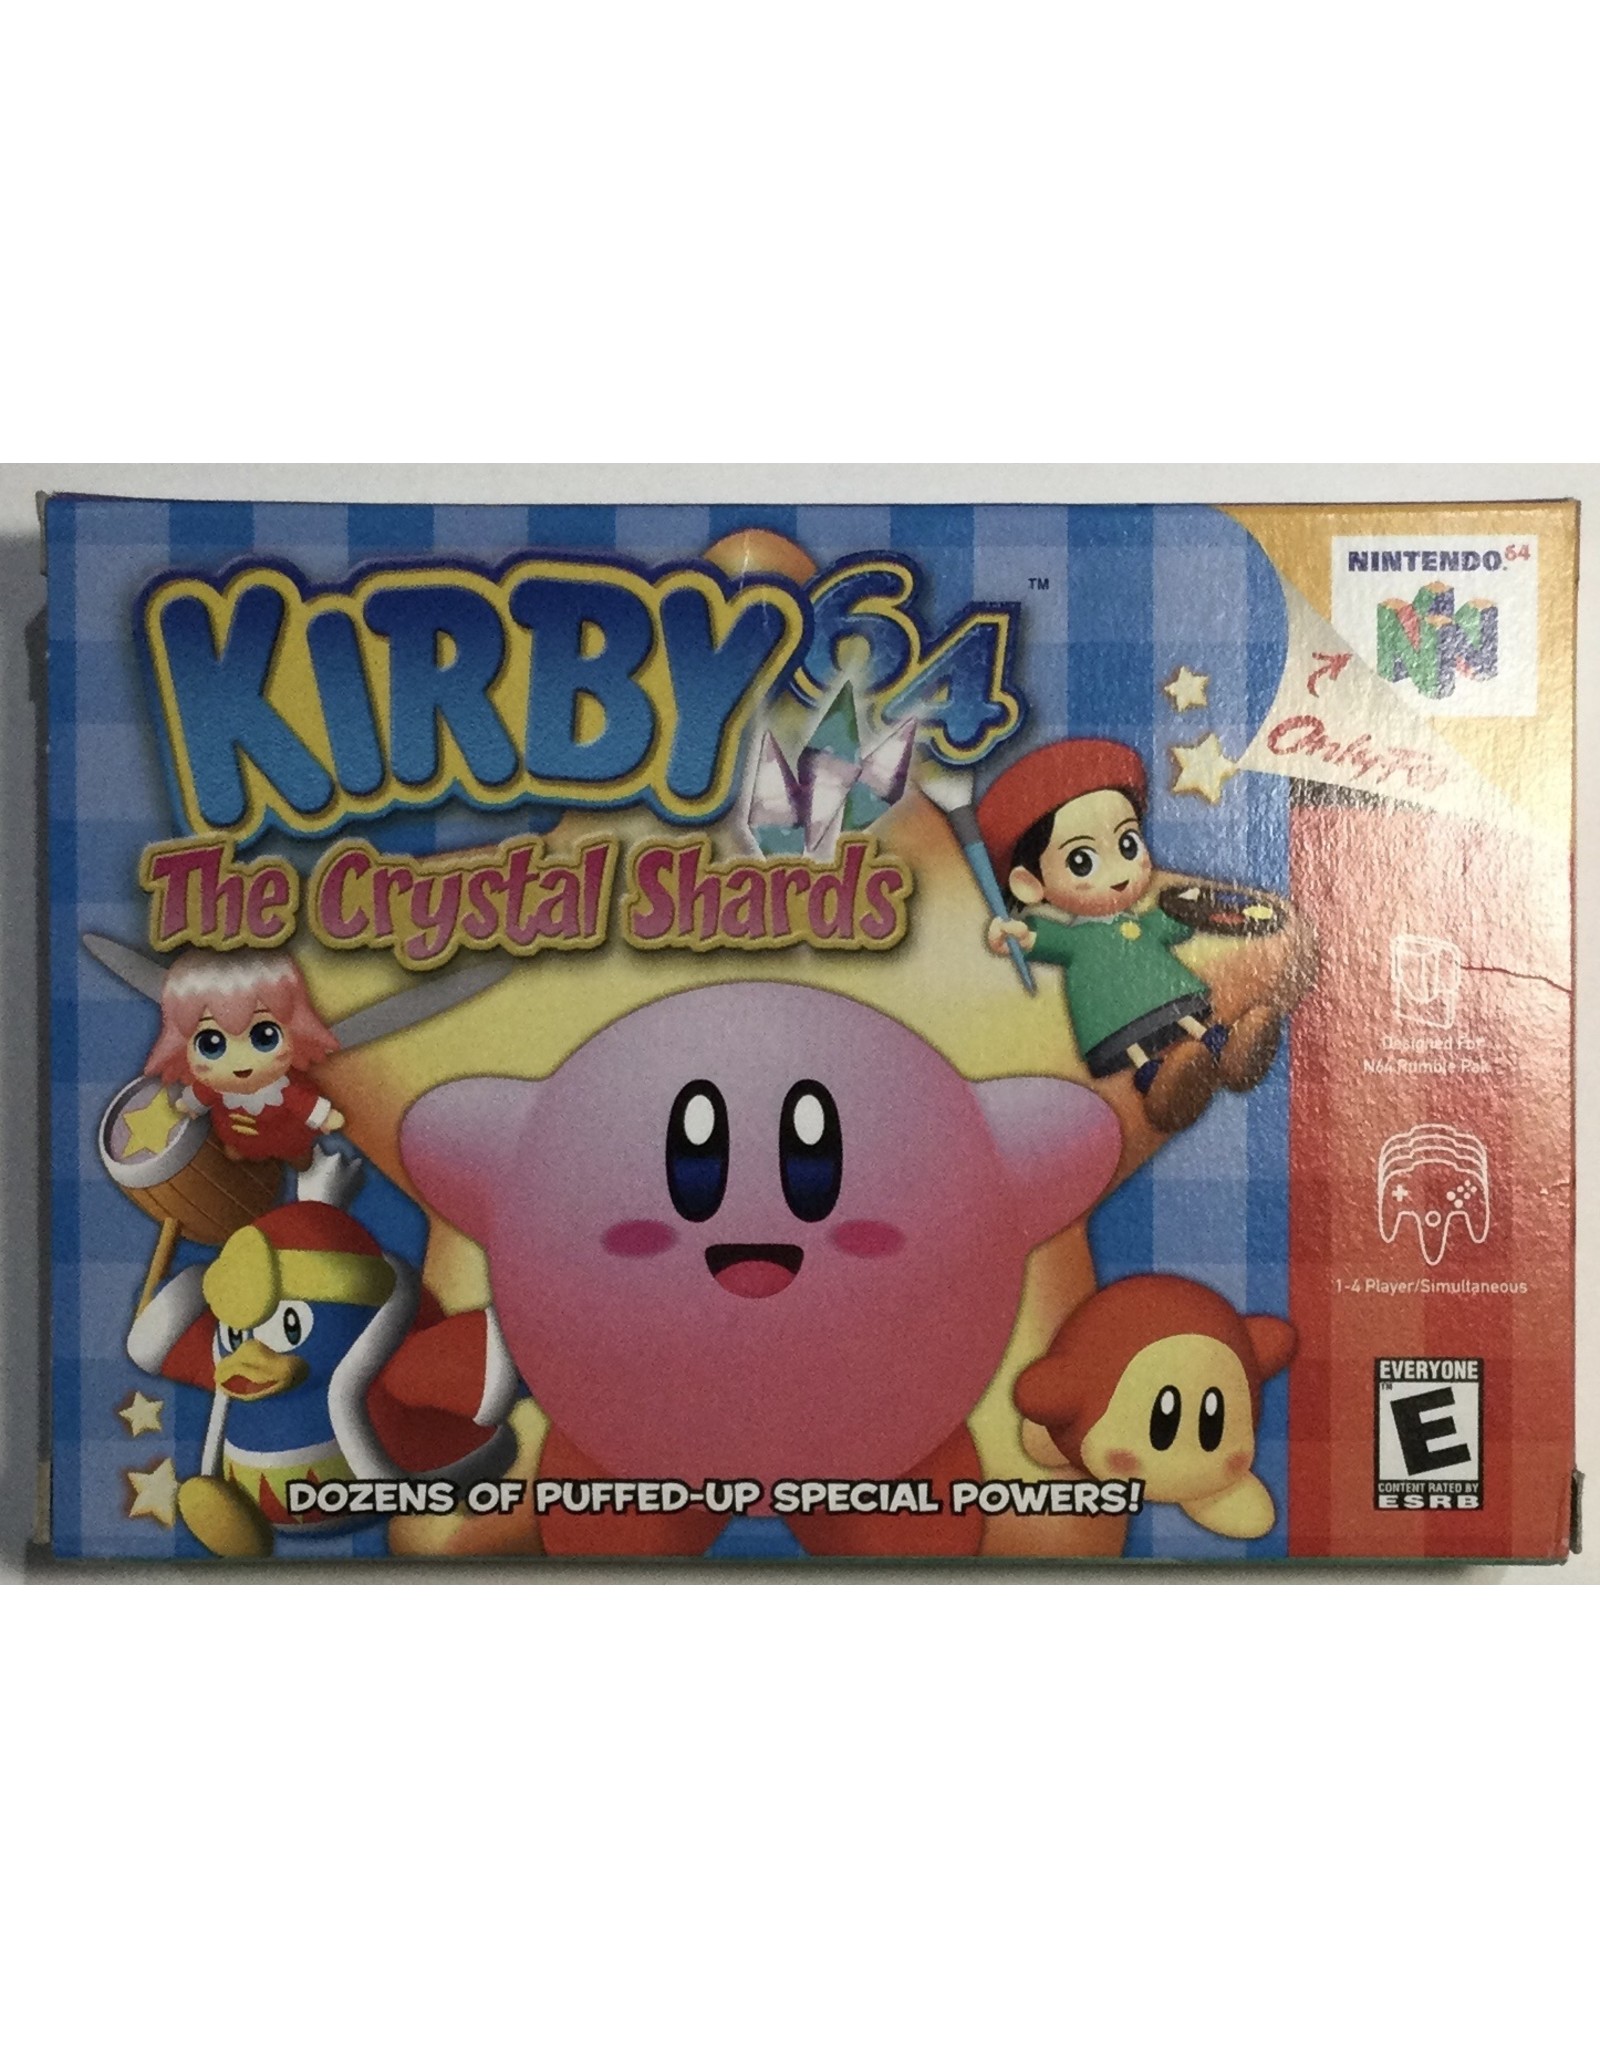 Kirby 64 The Crystal Shards for Nintendo 64 (N64) - CIB 